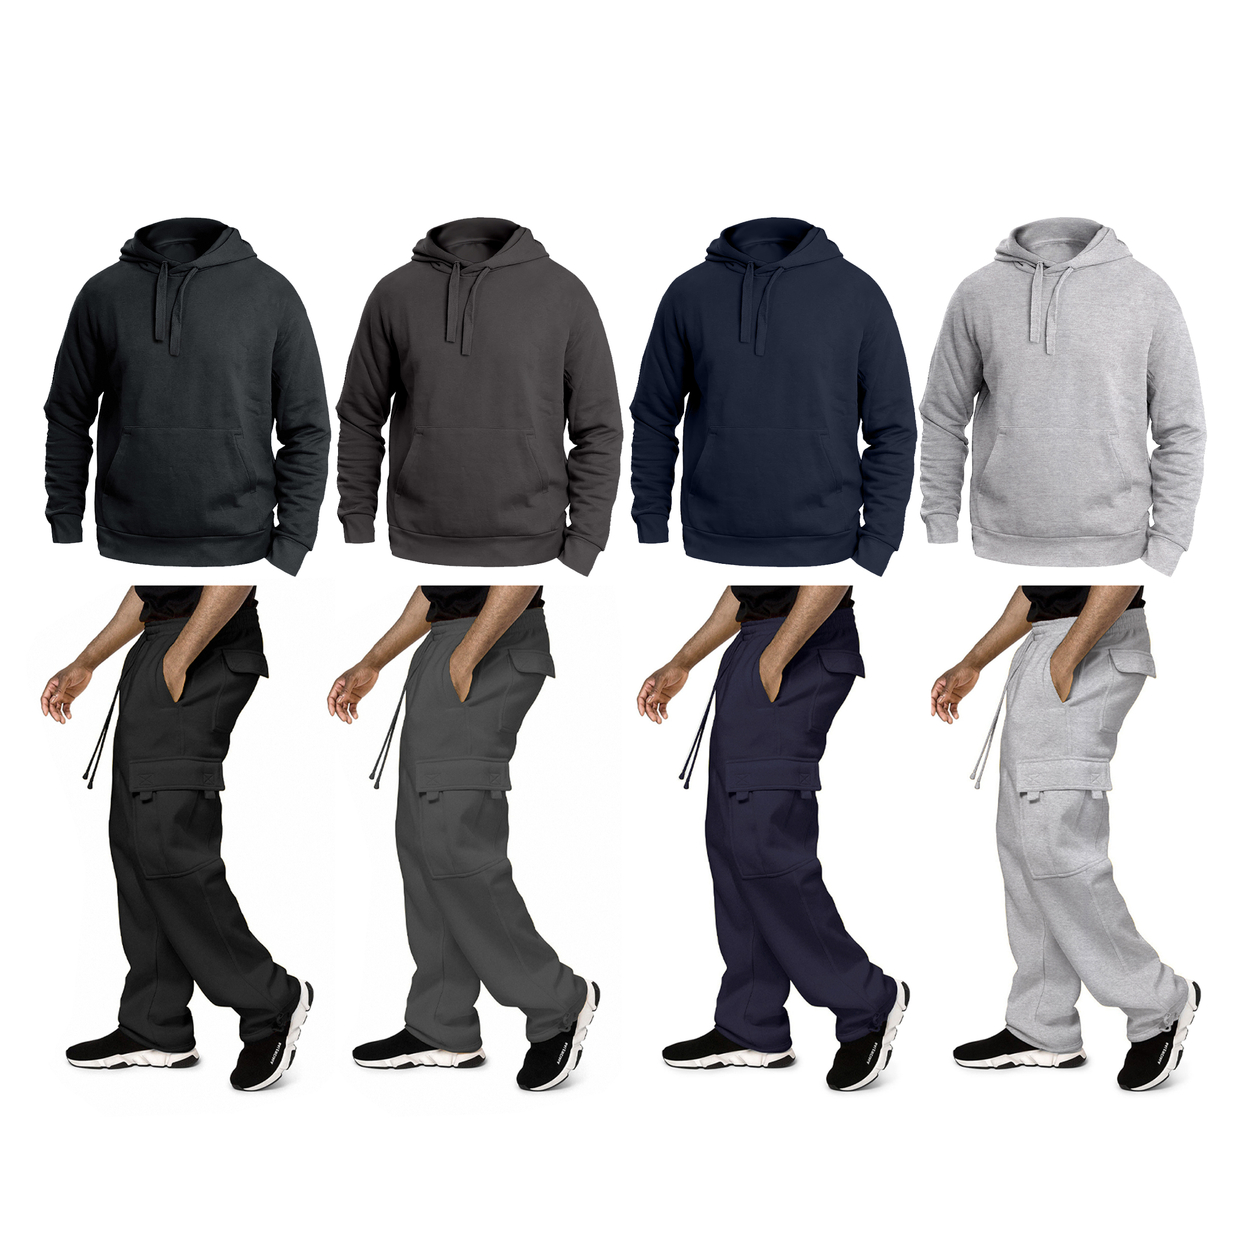 Men's Big & Tall Winter Warm Cozy Athletic Fleece Lined Multi-Pocket Cargo Sweatsuit - Navy, Small